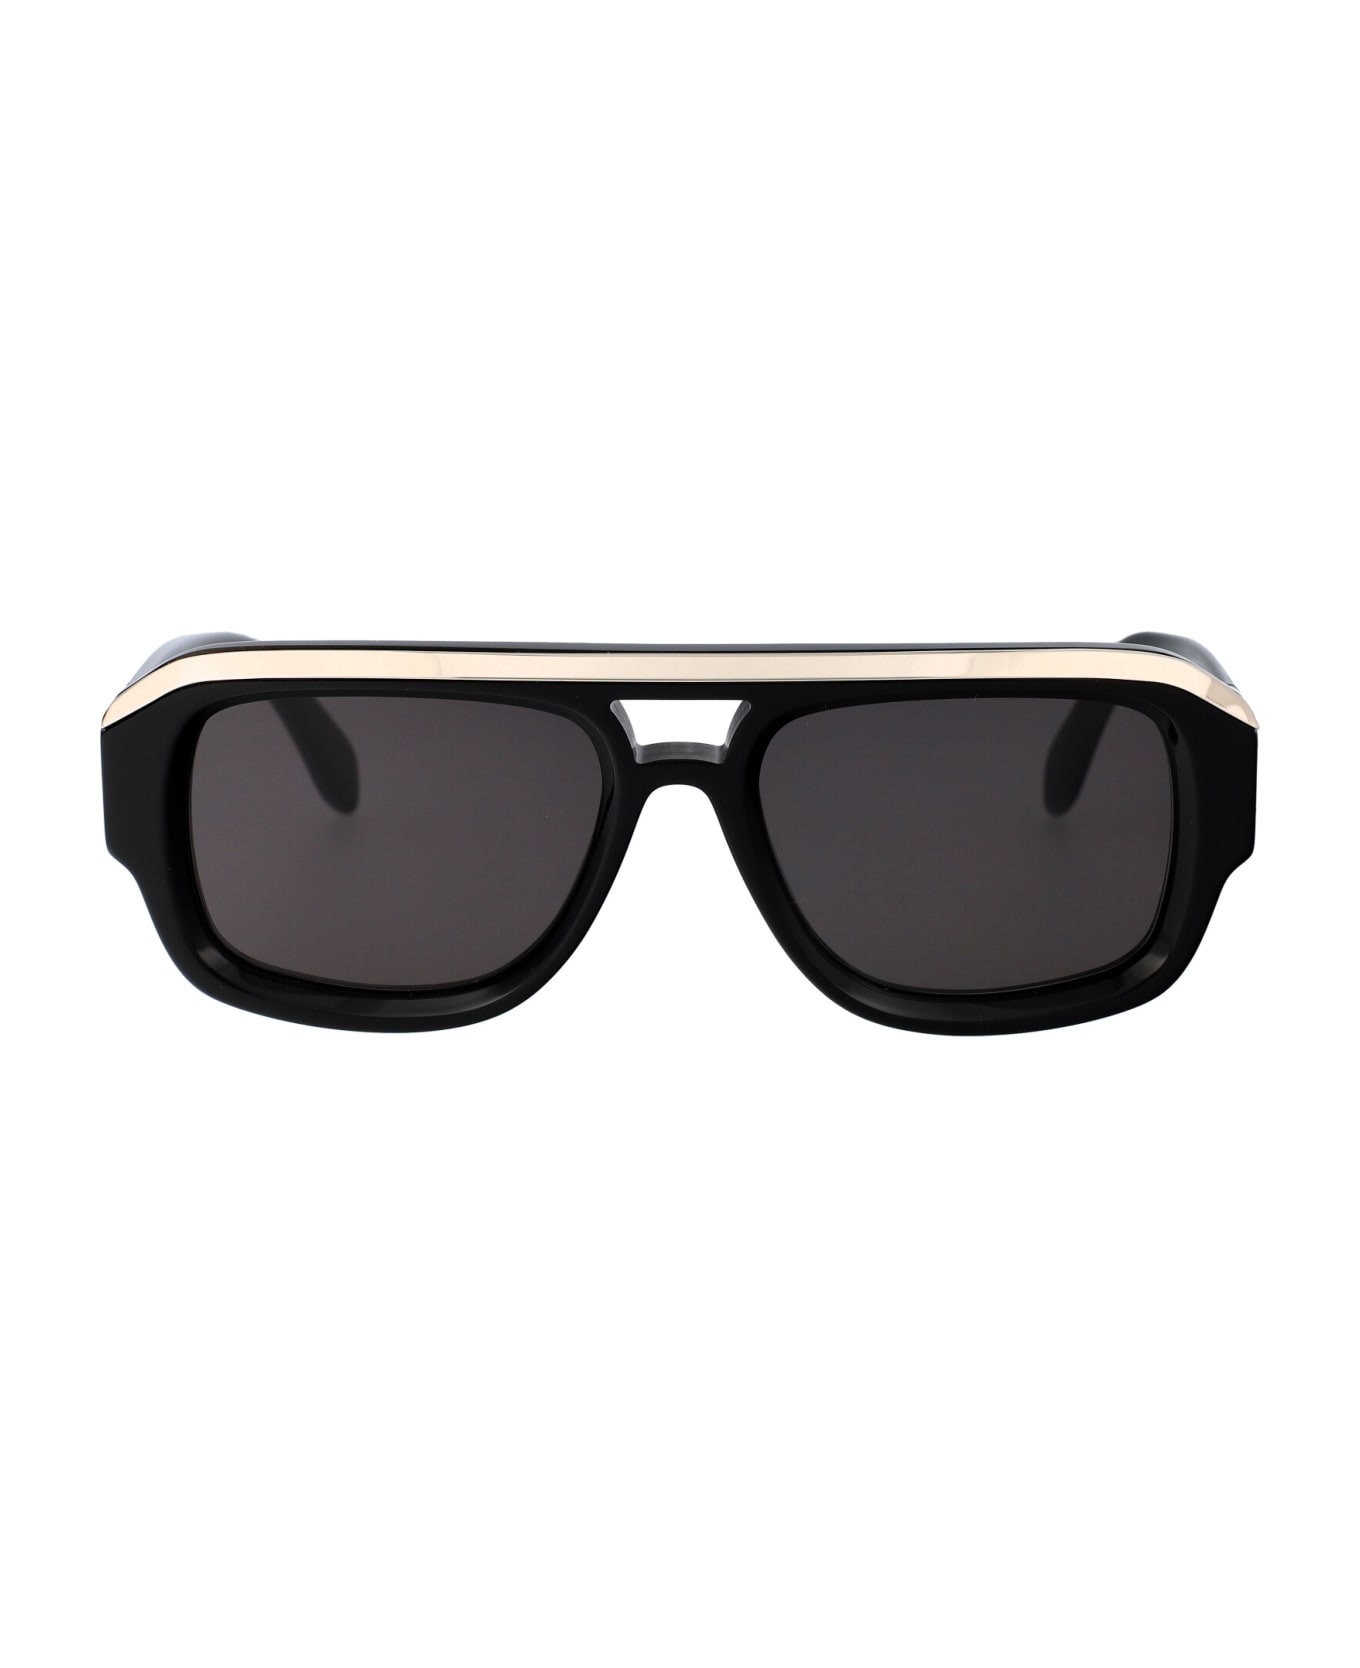 Palm Angels Stockton Sunglasses - 1007 BLACK